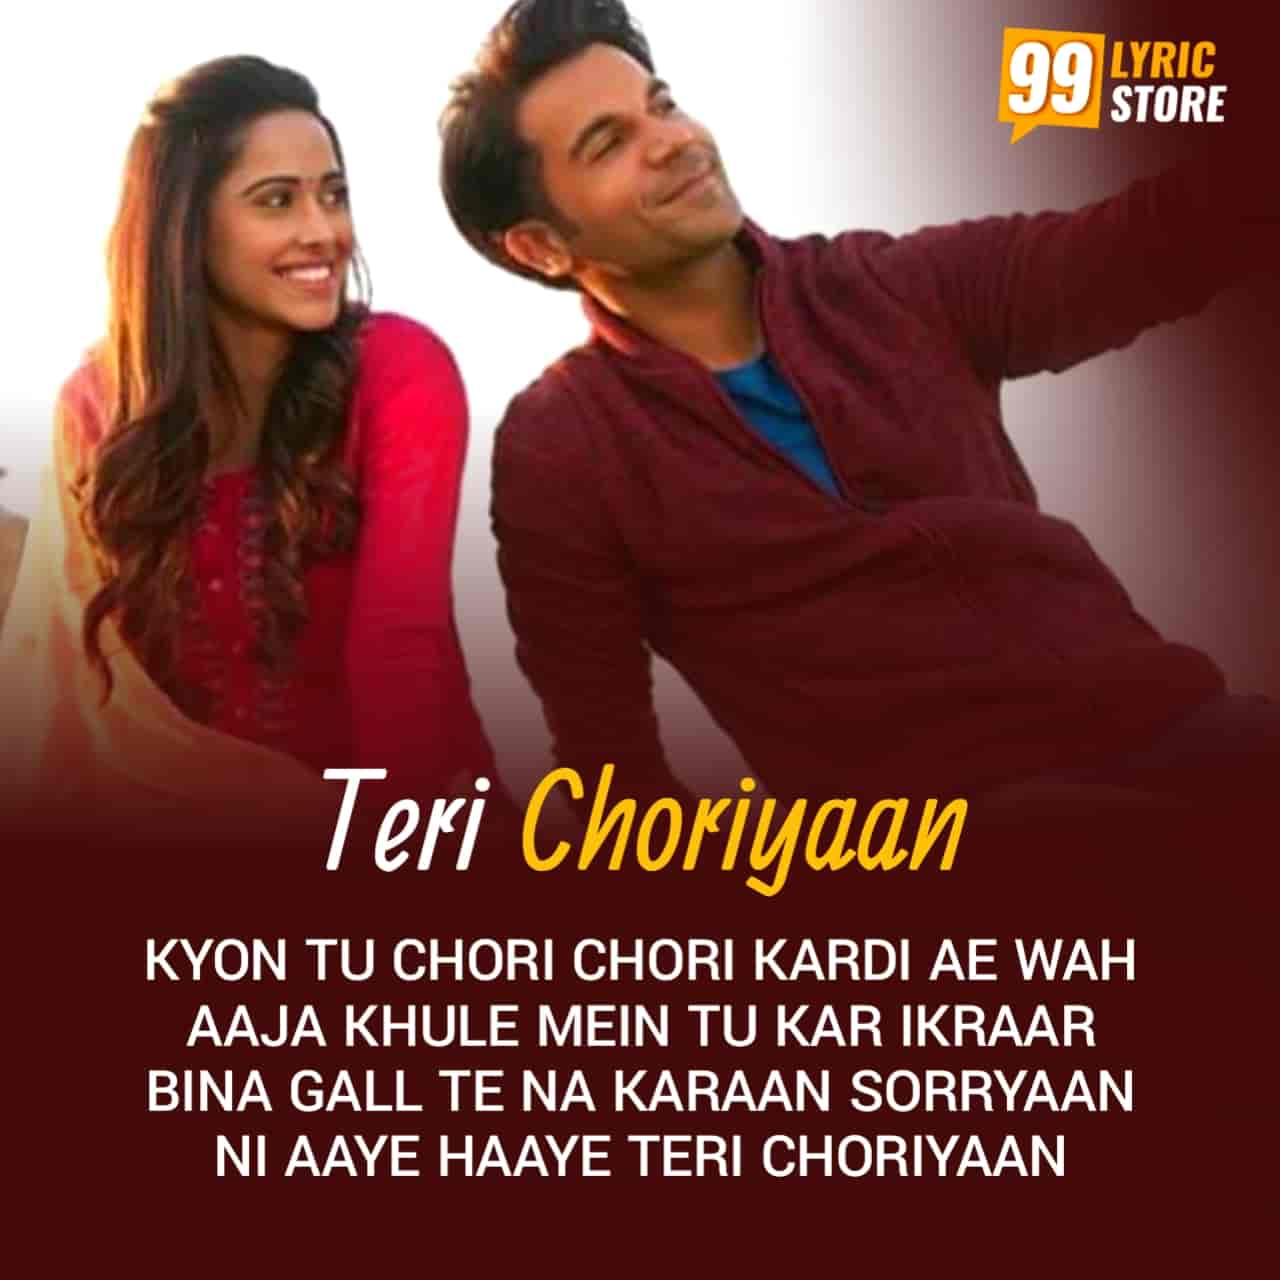 A very beautiful punjabi song Teri Choriyaan Rajkumar Rao and Nushrratt Bharuccha starrer movie Chhalaang's next song which will steal our hearts.